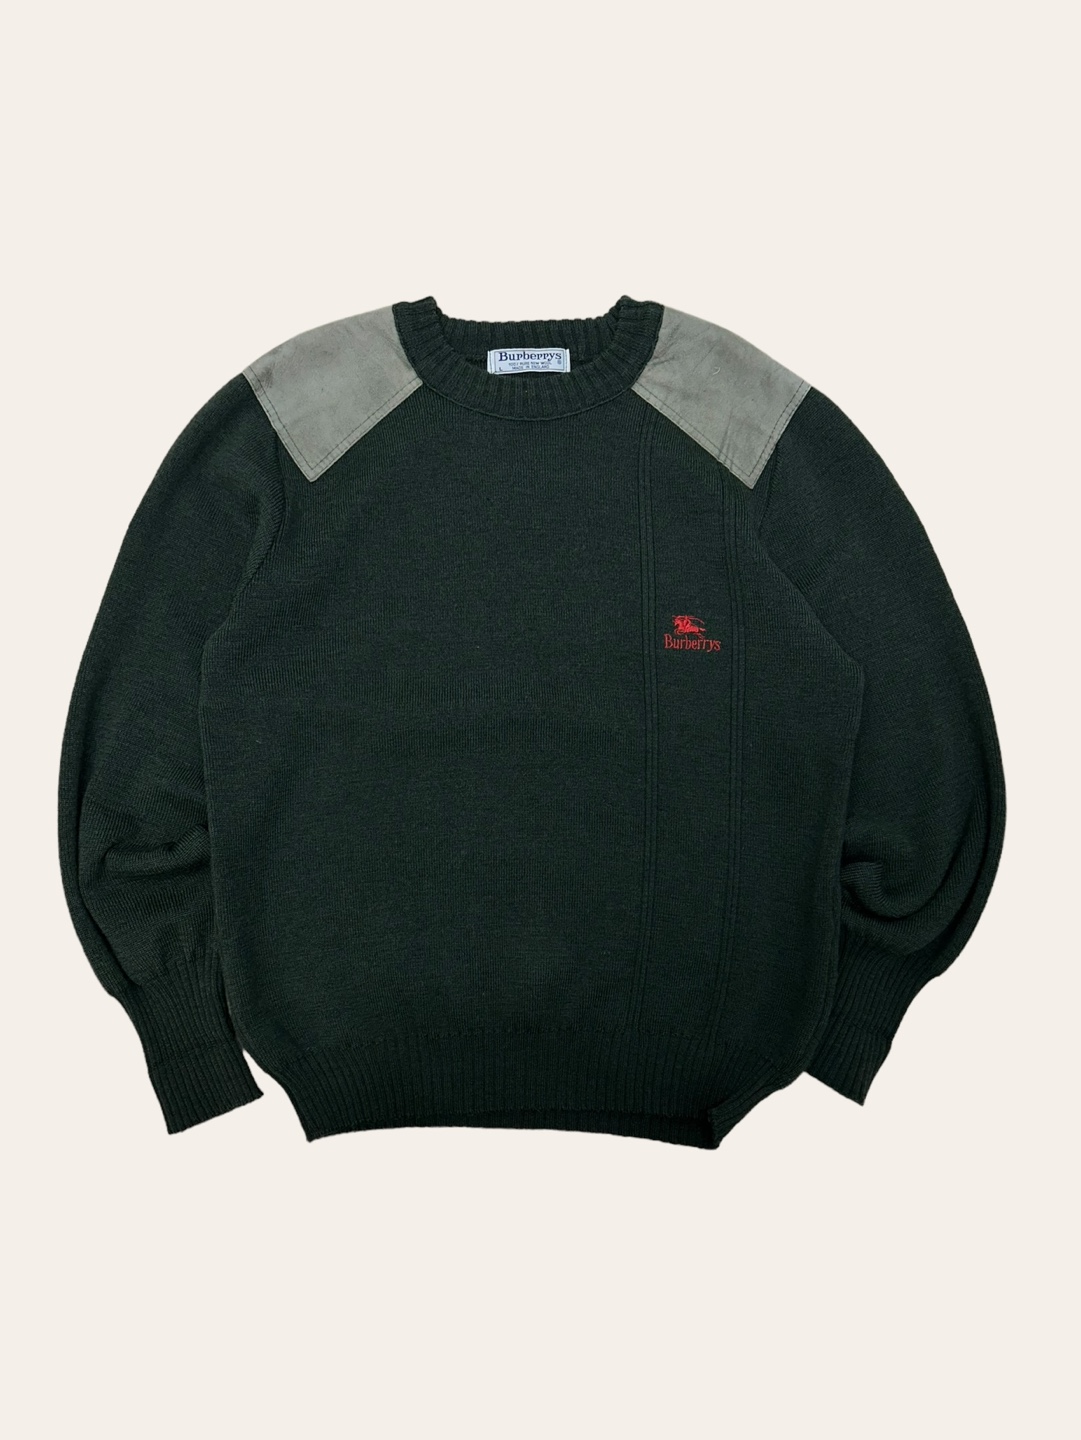 Burberry khaki commando pure new wool sweater L